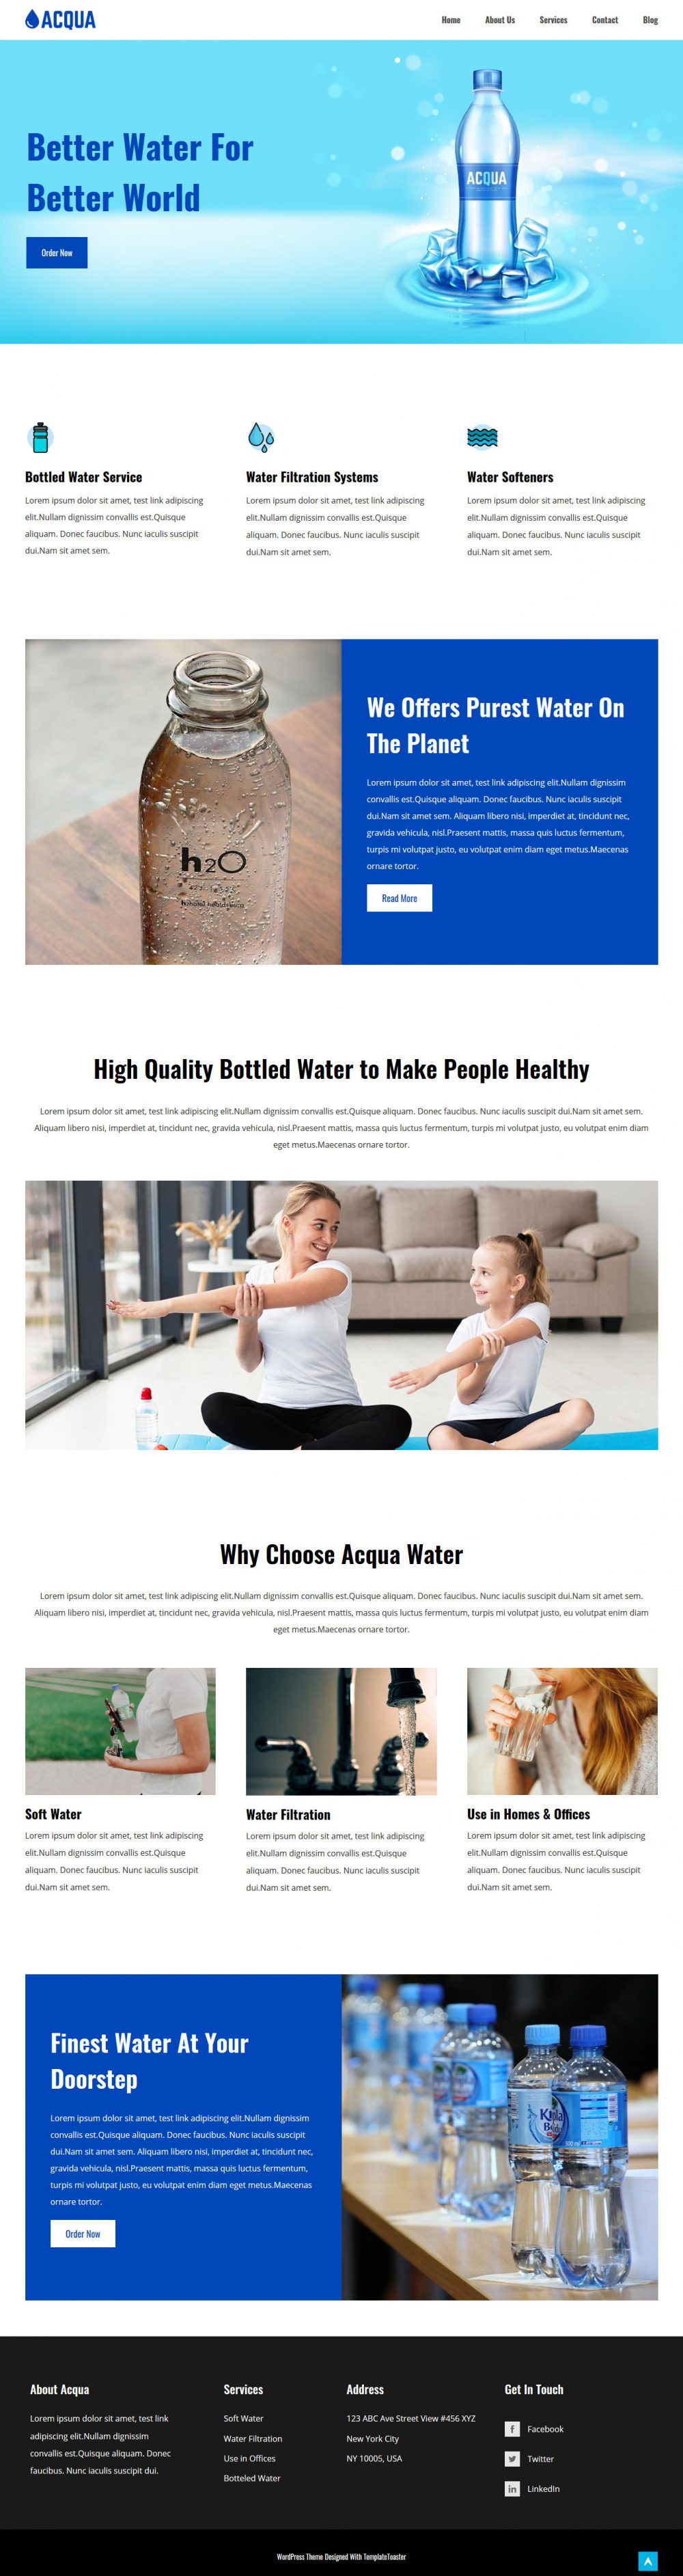 acqua water purifier joomla template